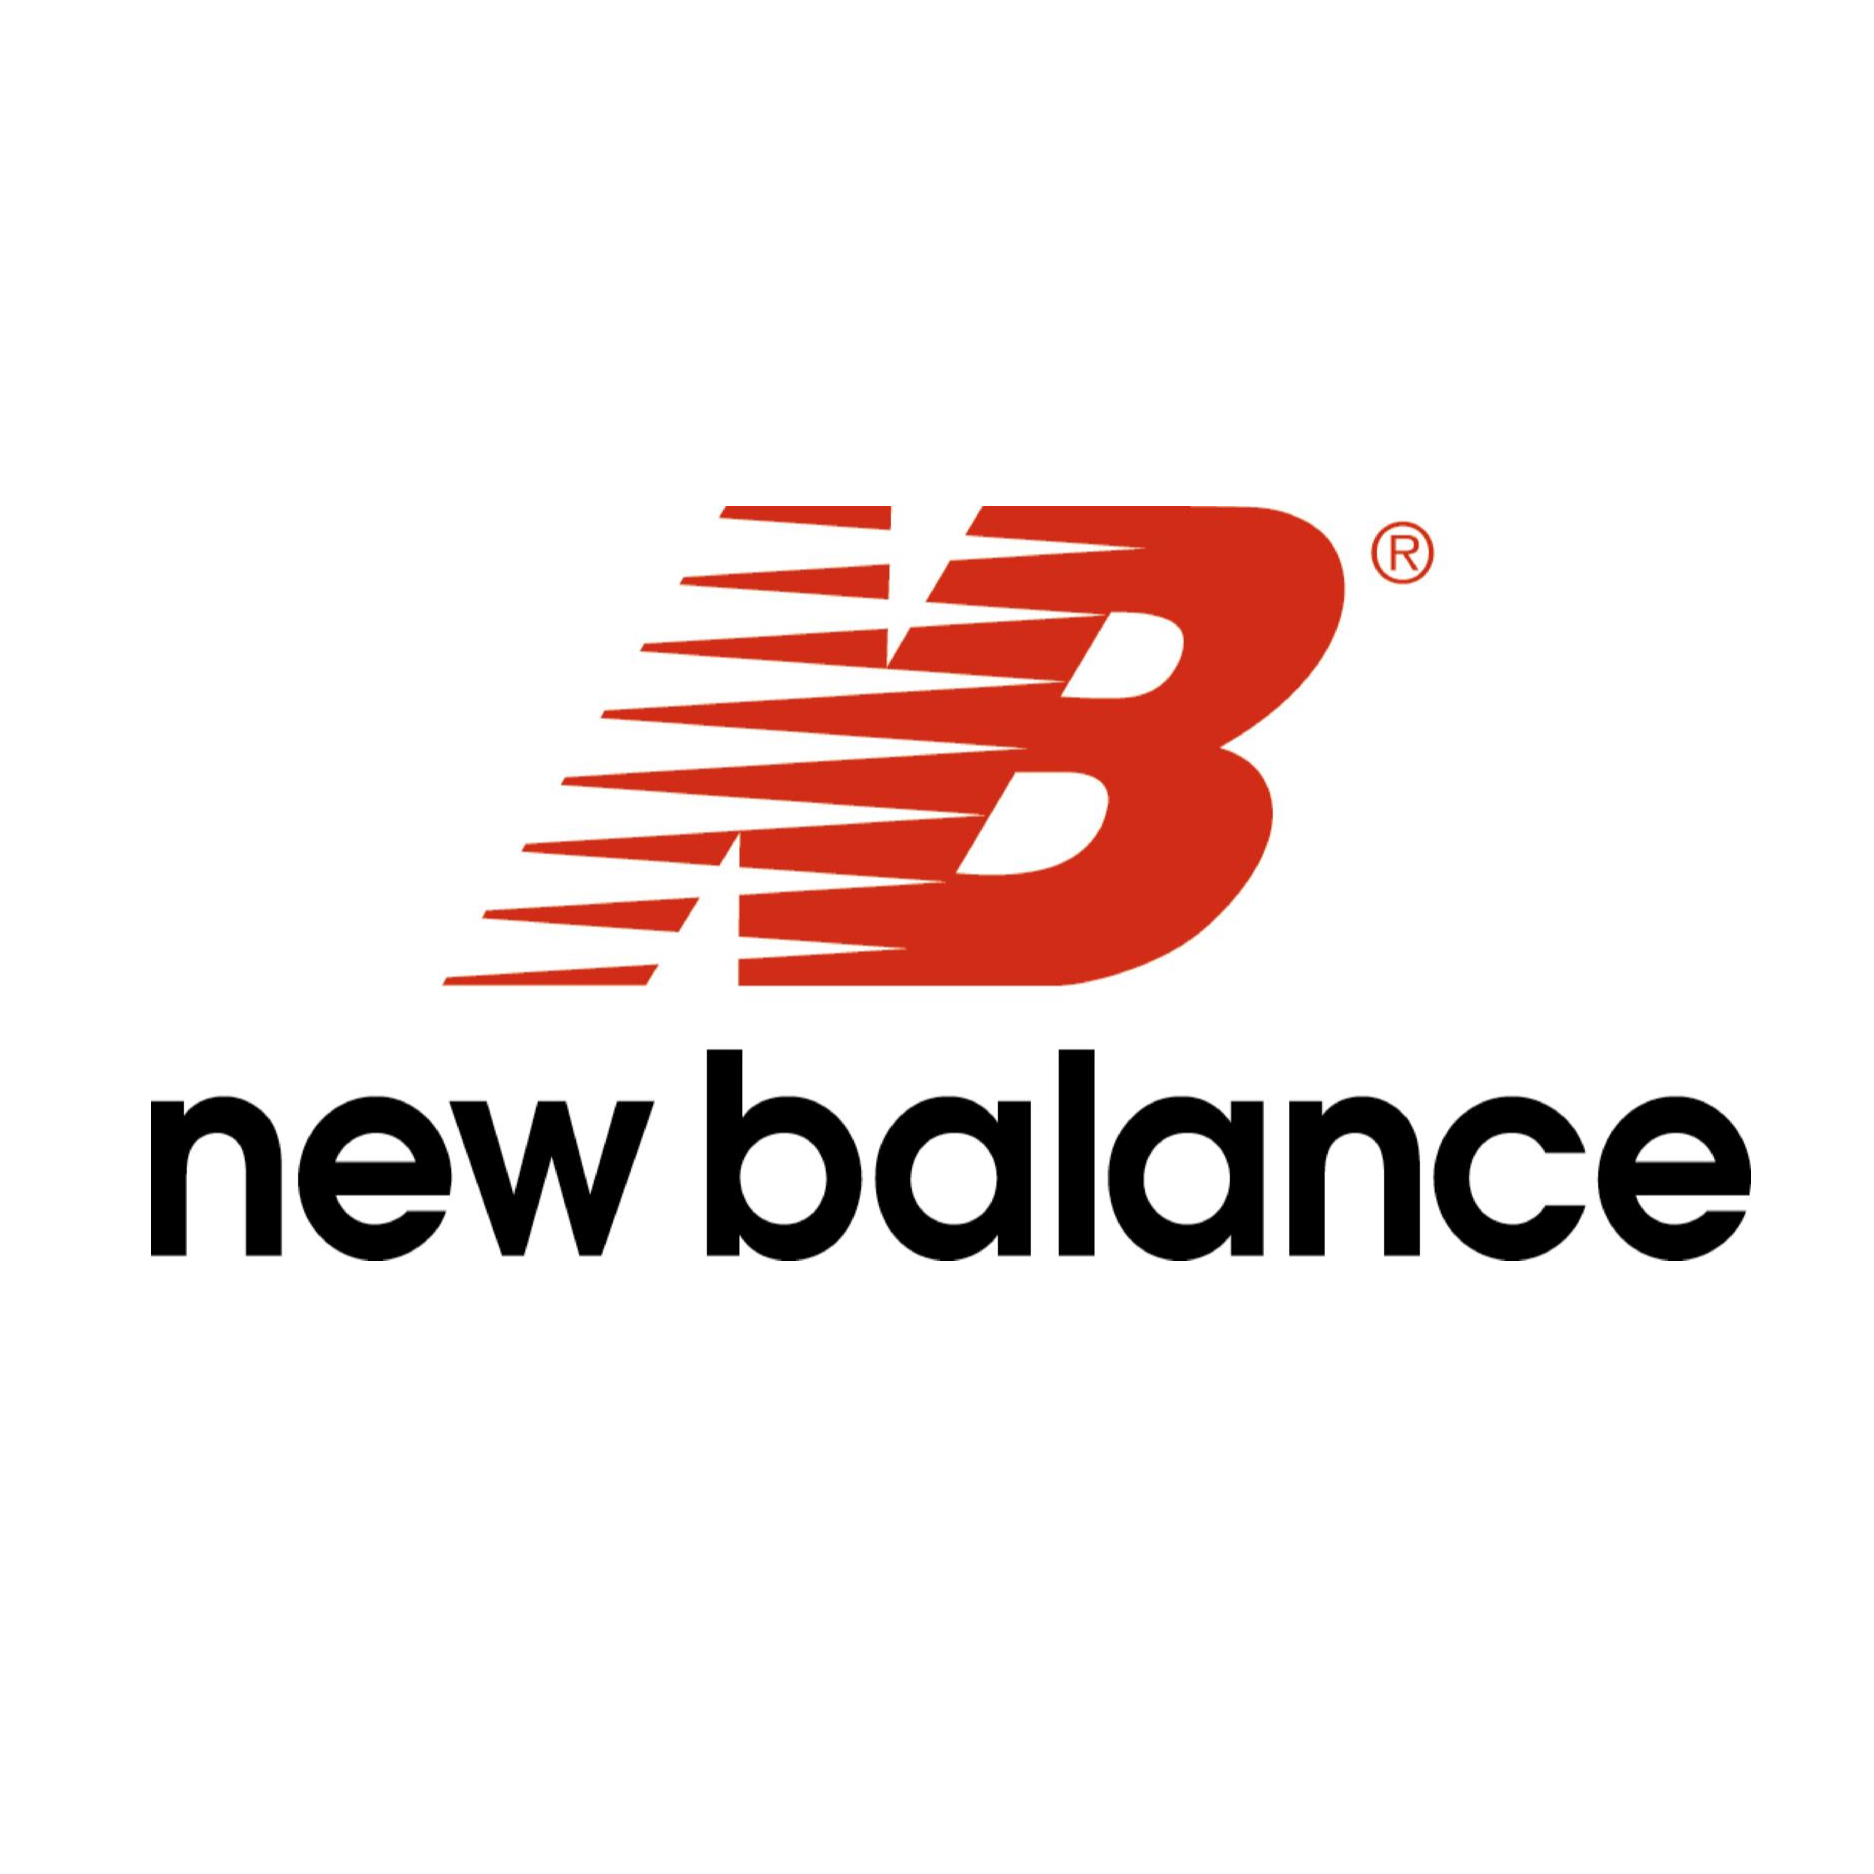 new balance promo